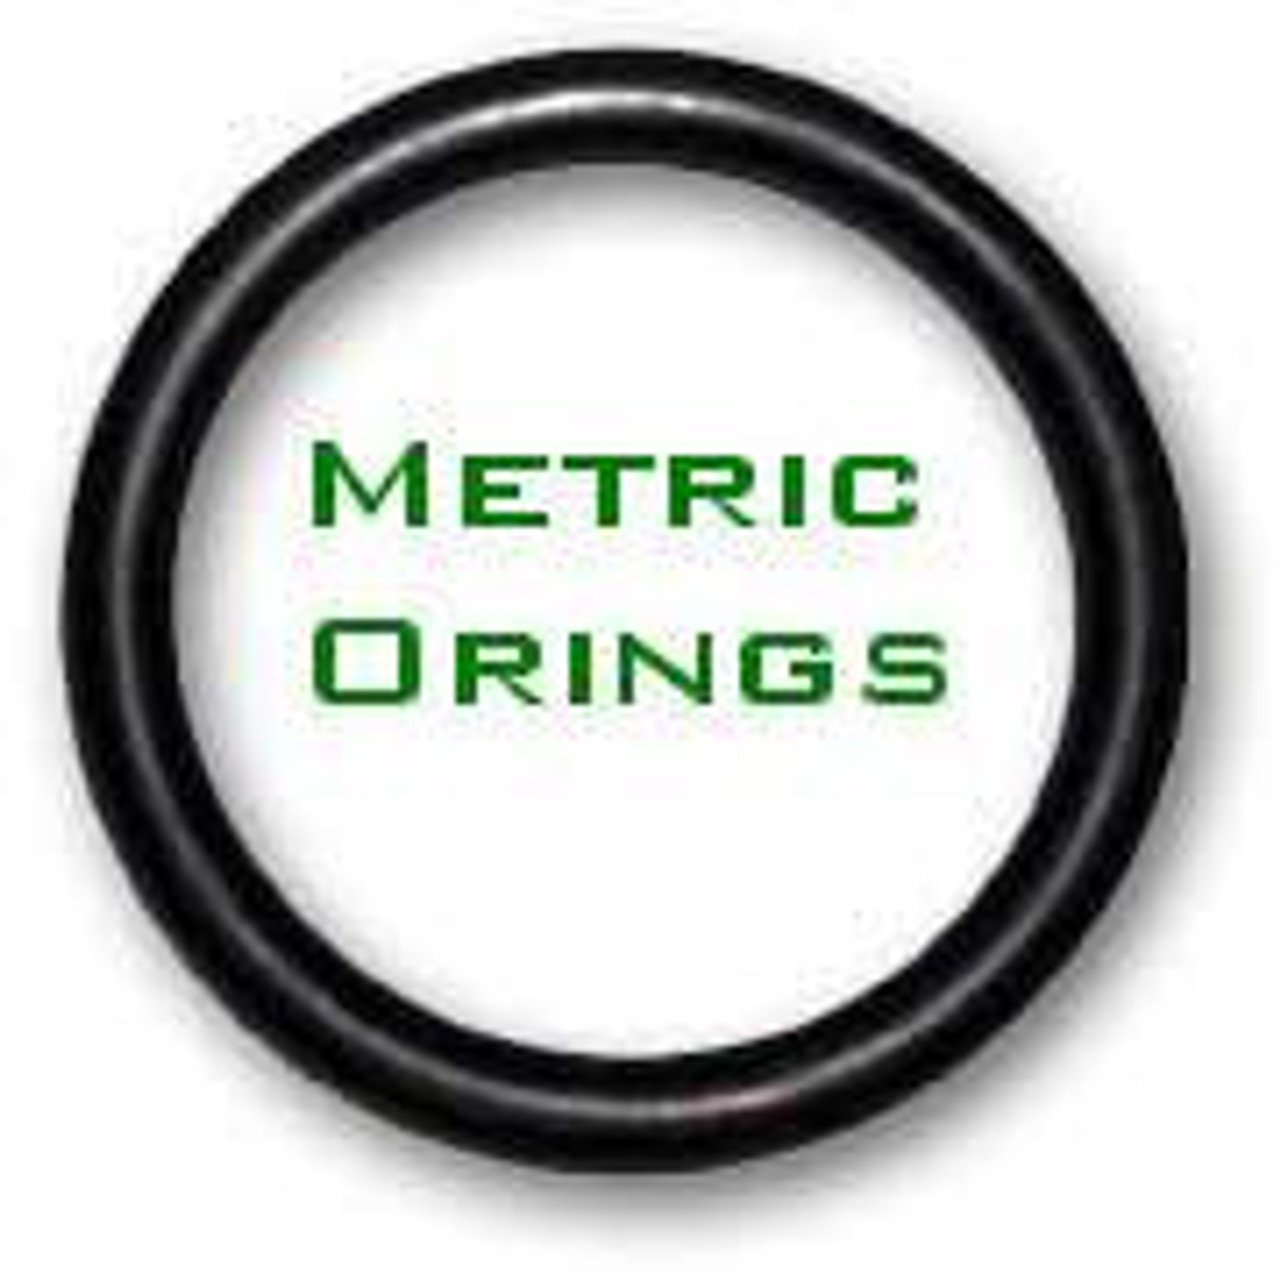 8mm x 12mm x 2mm O-Ring (10 pieces): Amazon.com: Industrial & Scientific